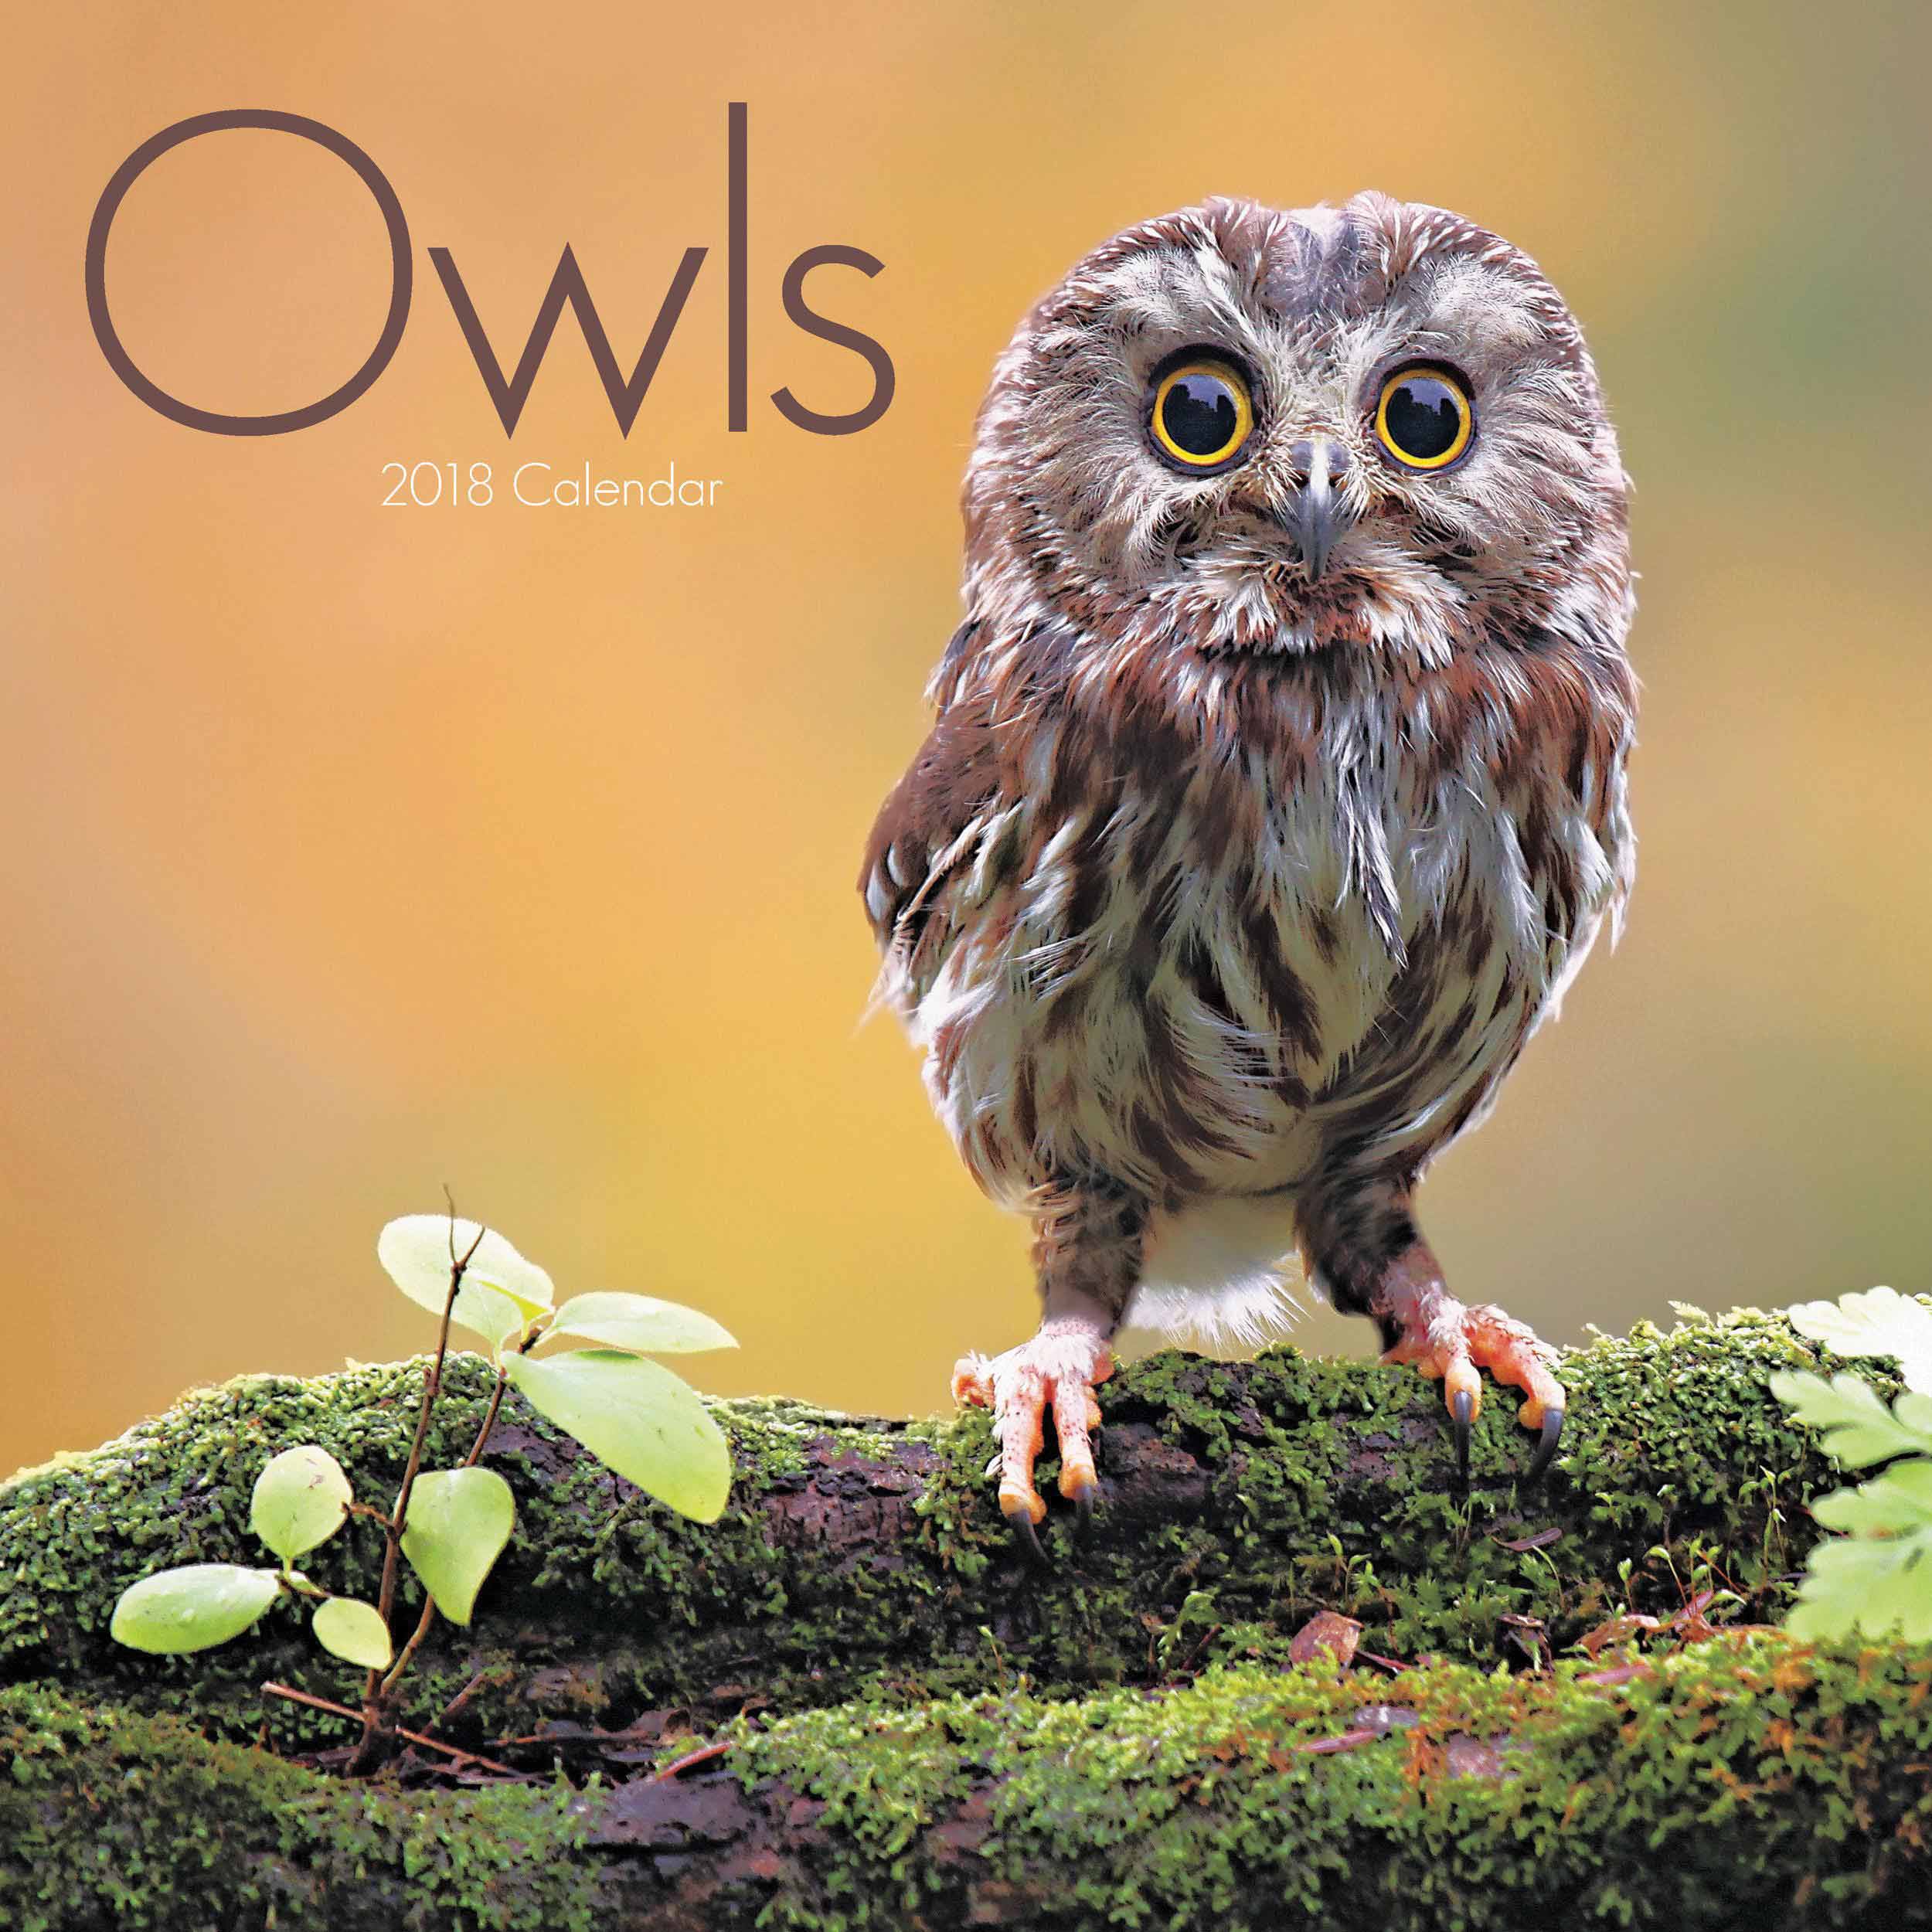 Owls Calendar 2018 - Calendar Club UK